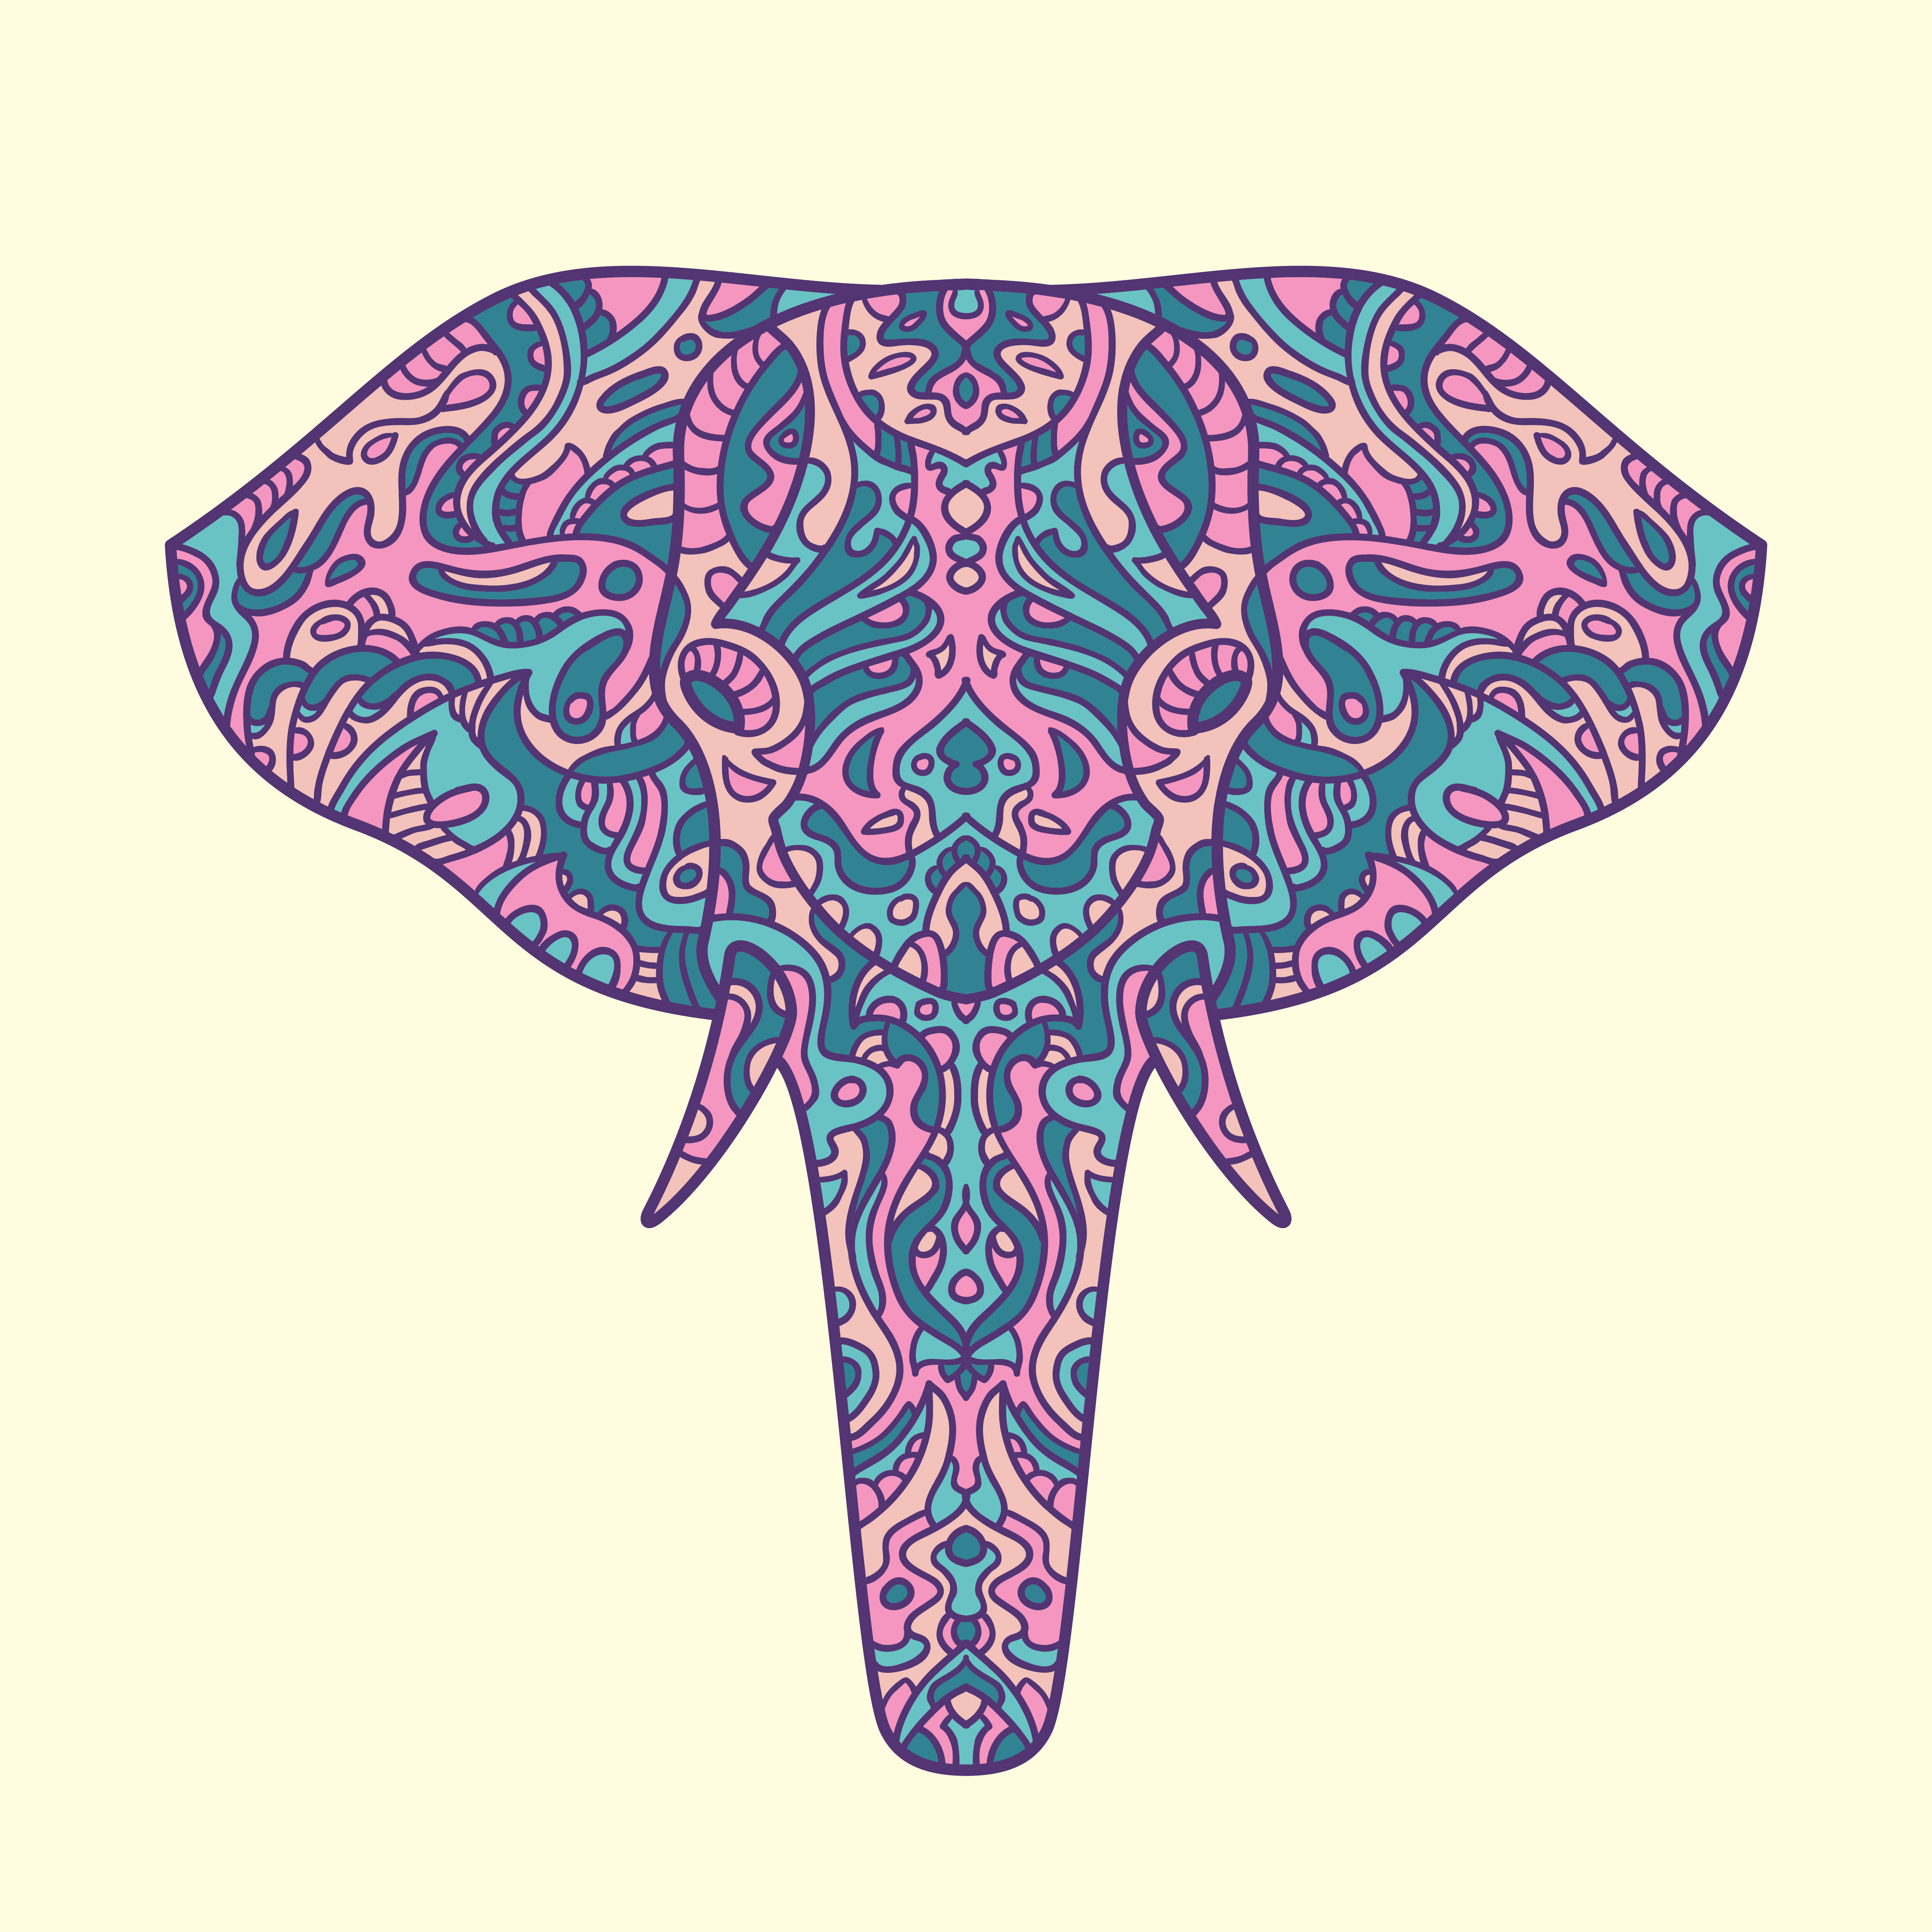 Painted elephant illustration - Download Free Vectors ...